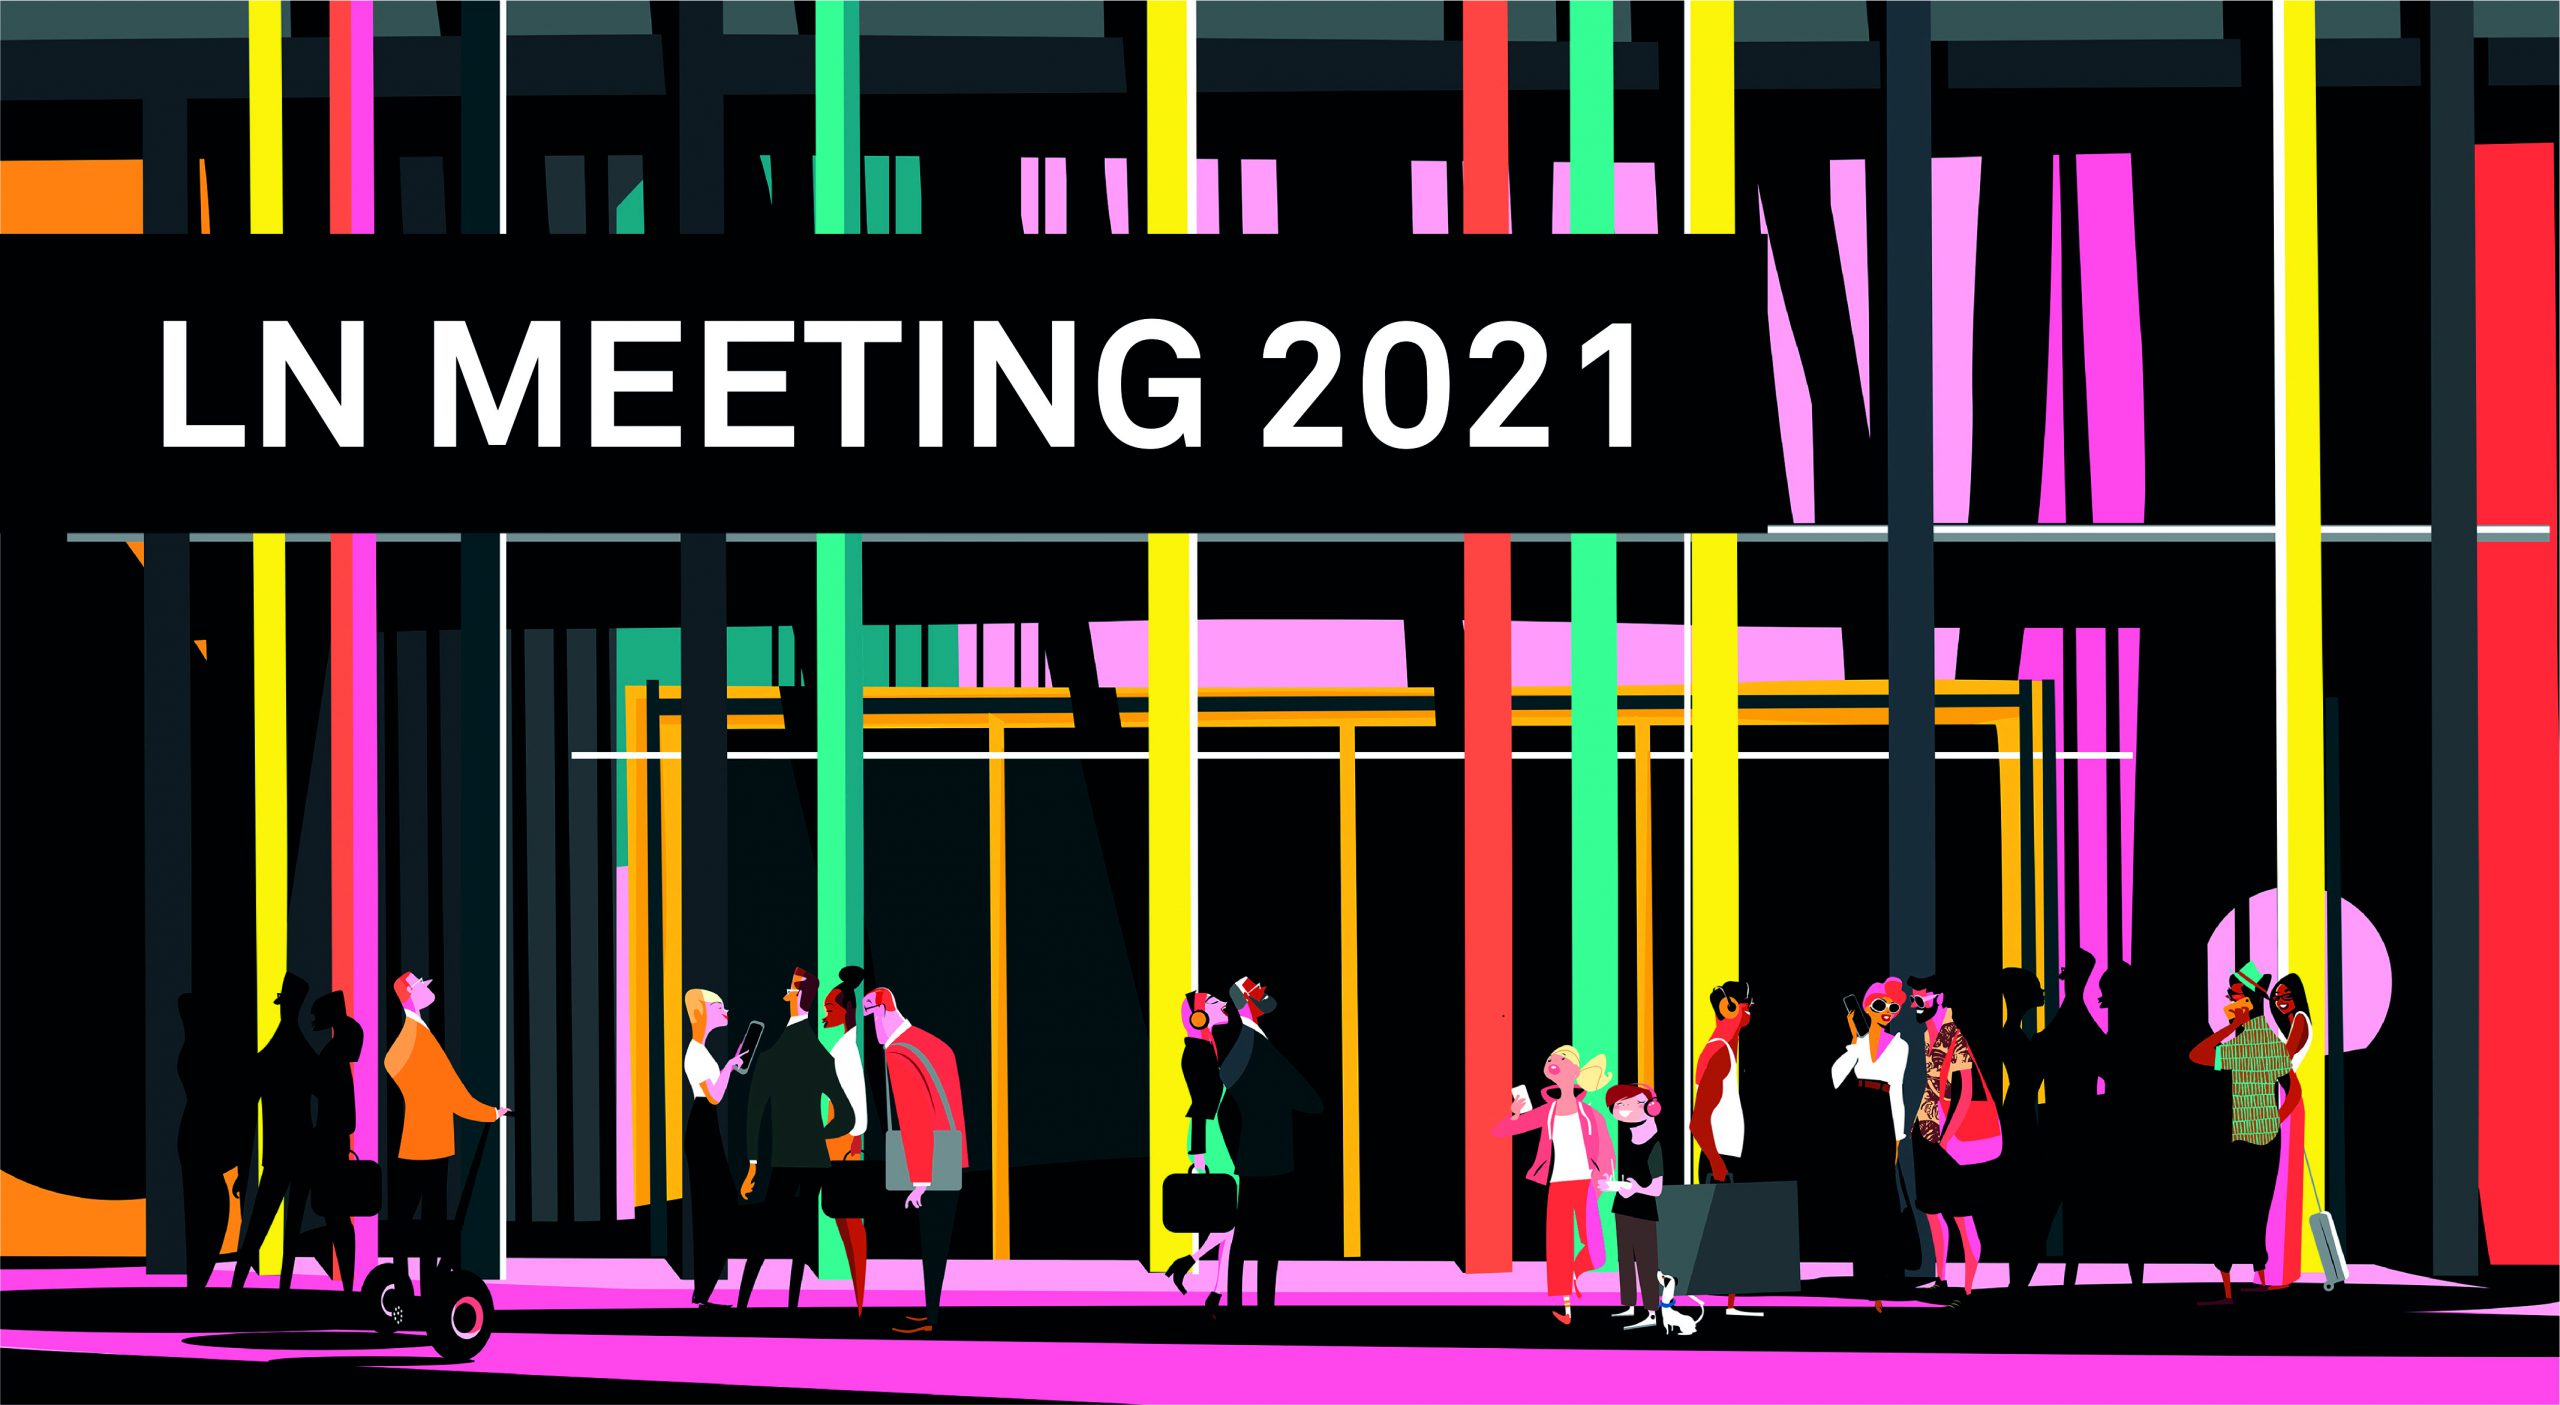 La Nave LN Meeting 2021